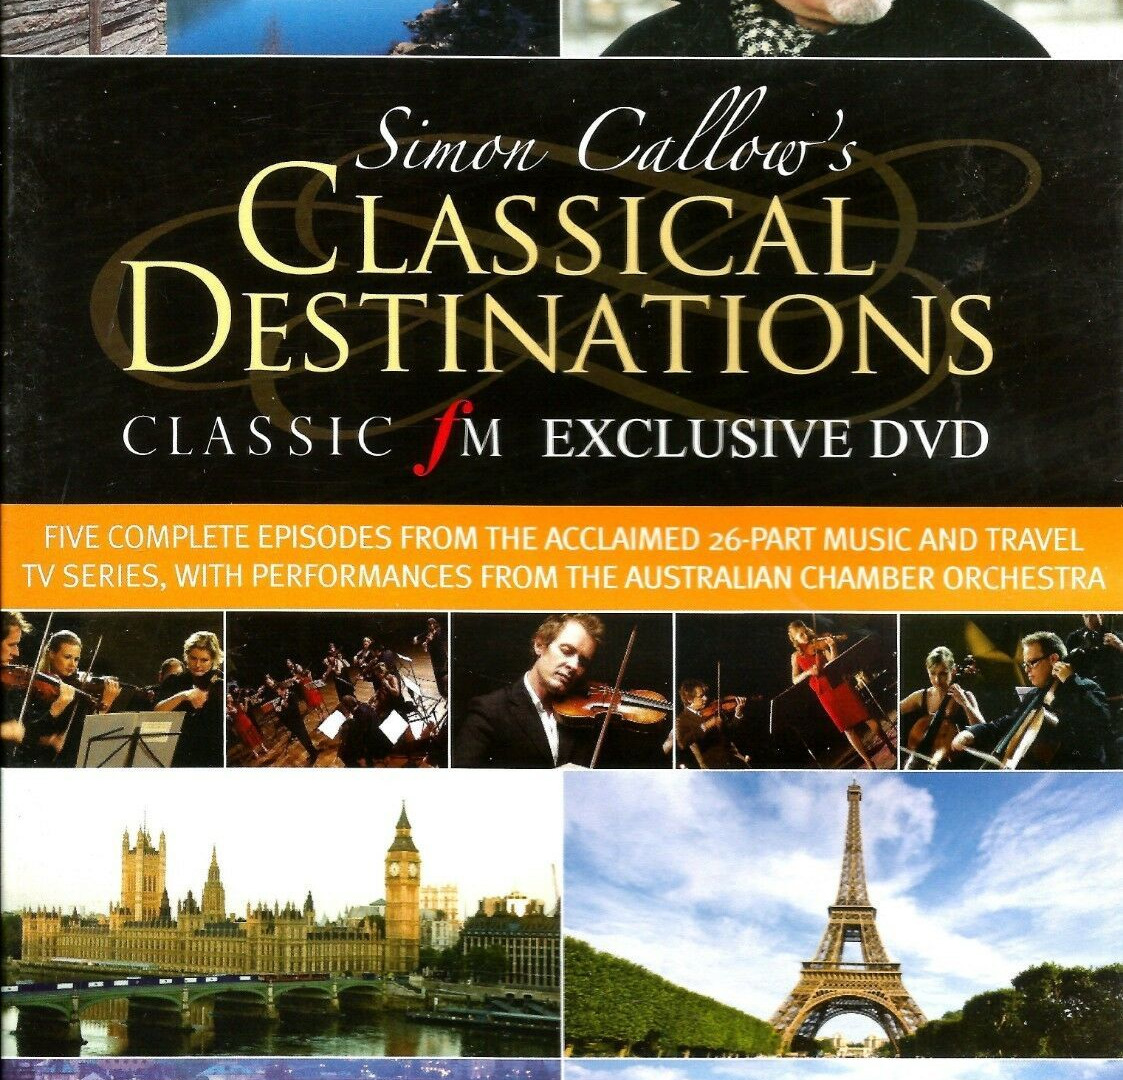 Show Classical Destinations